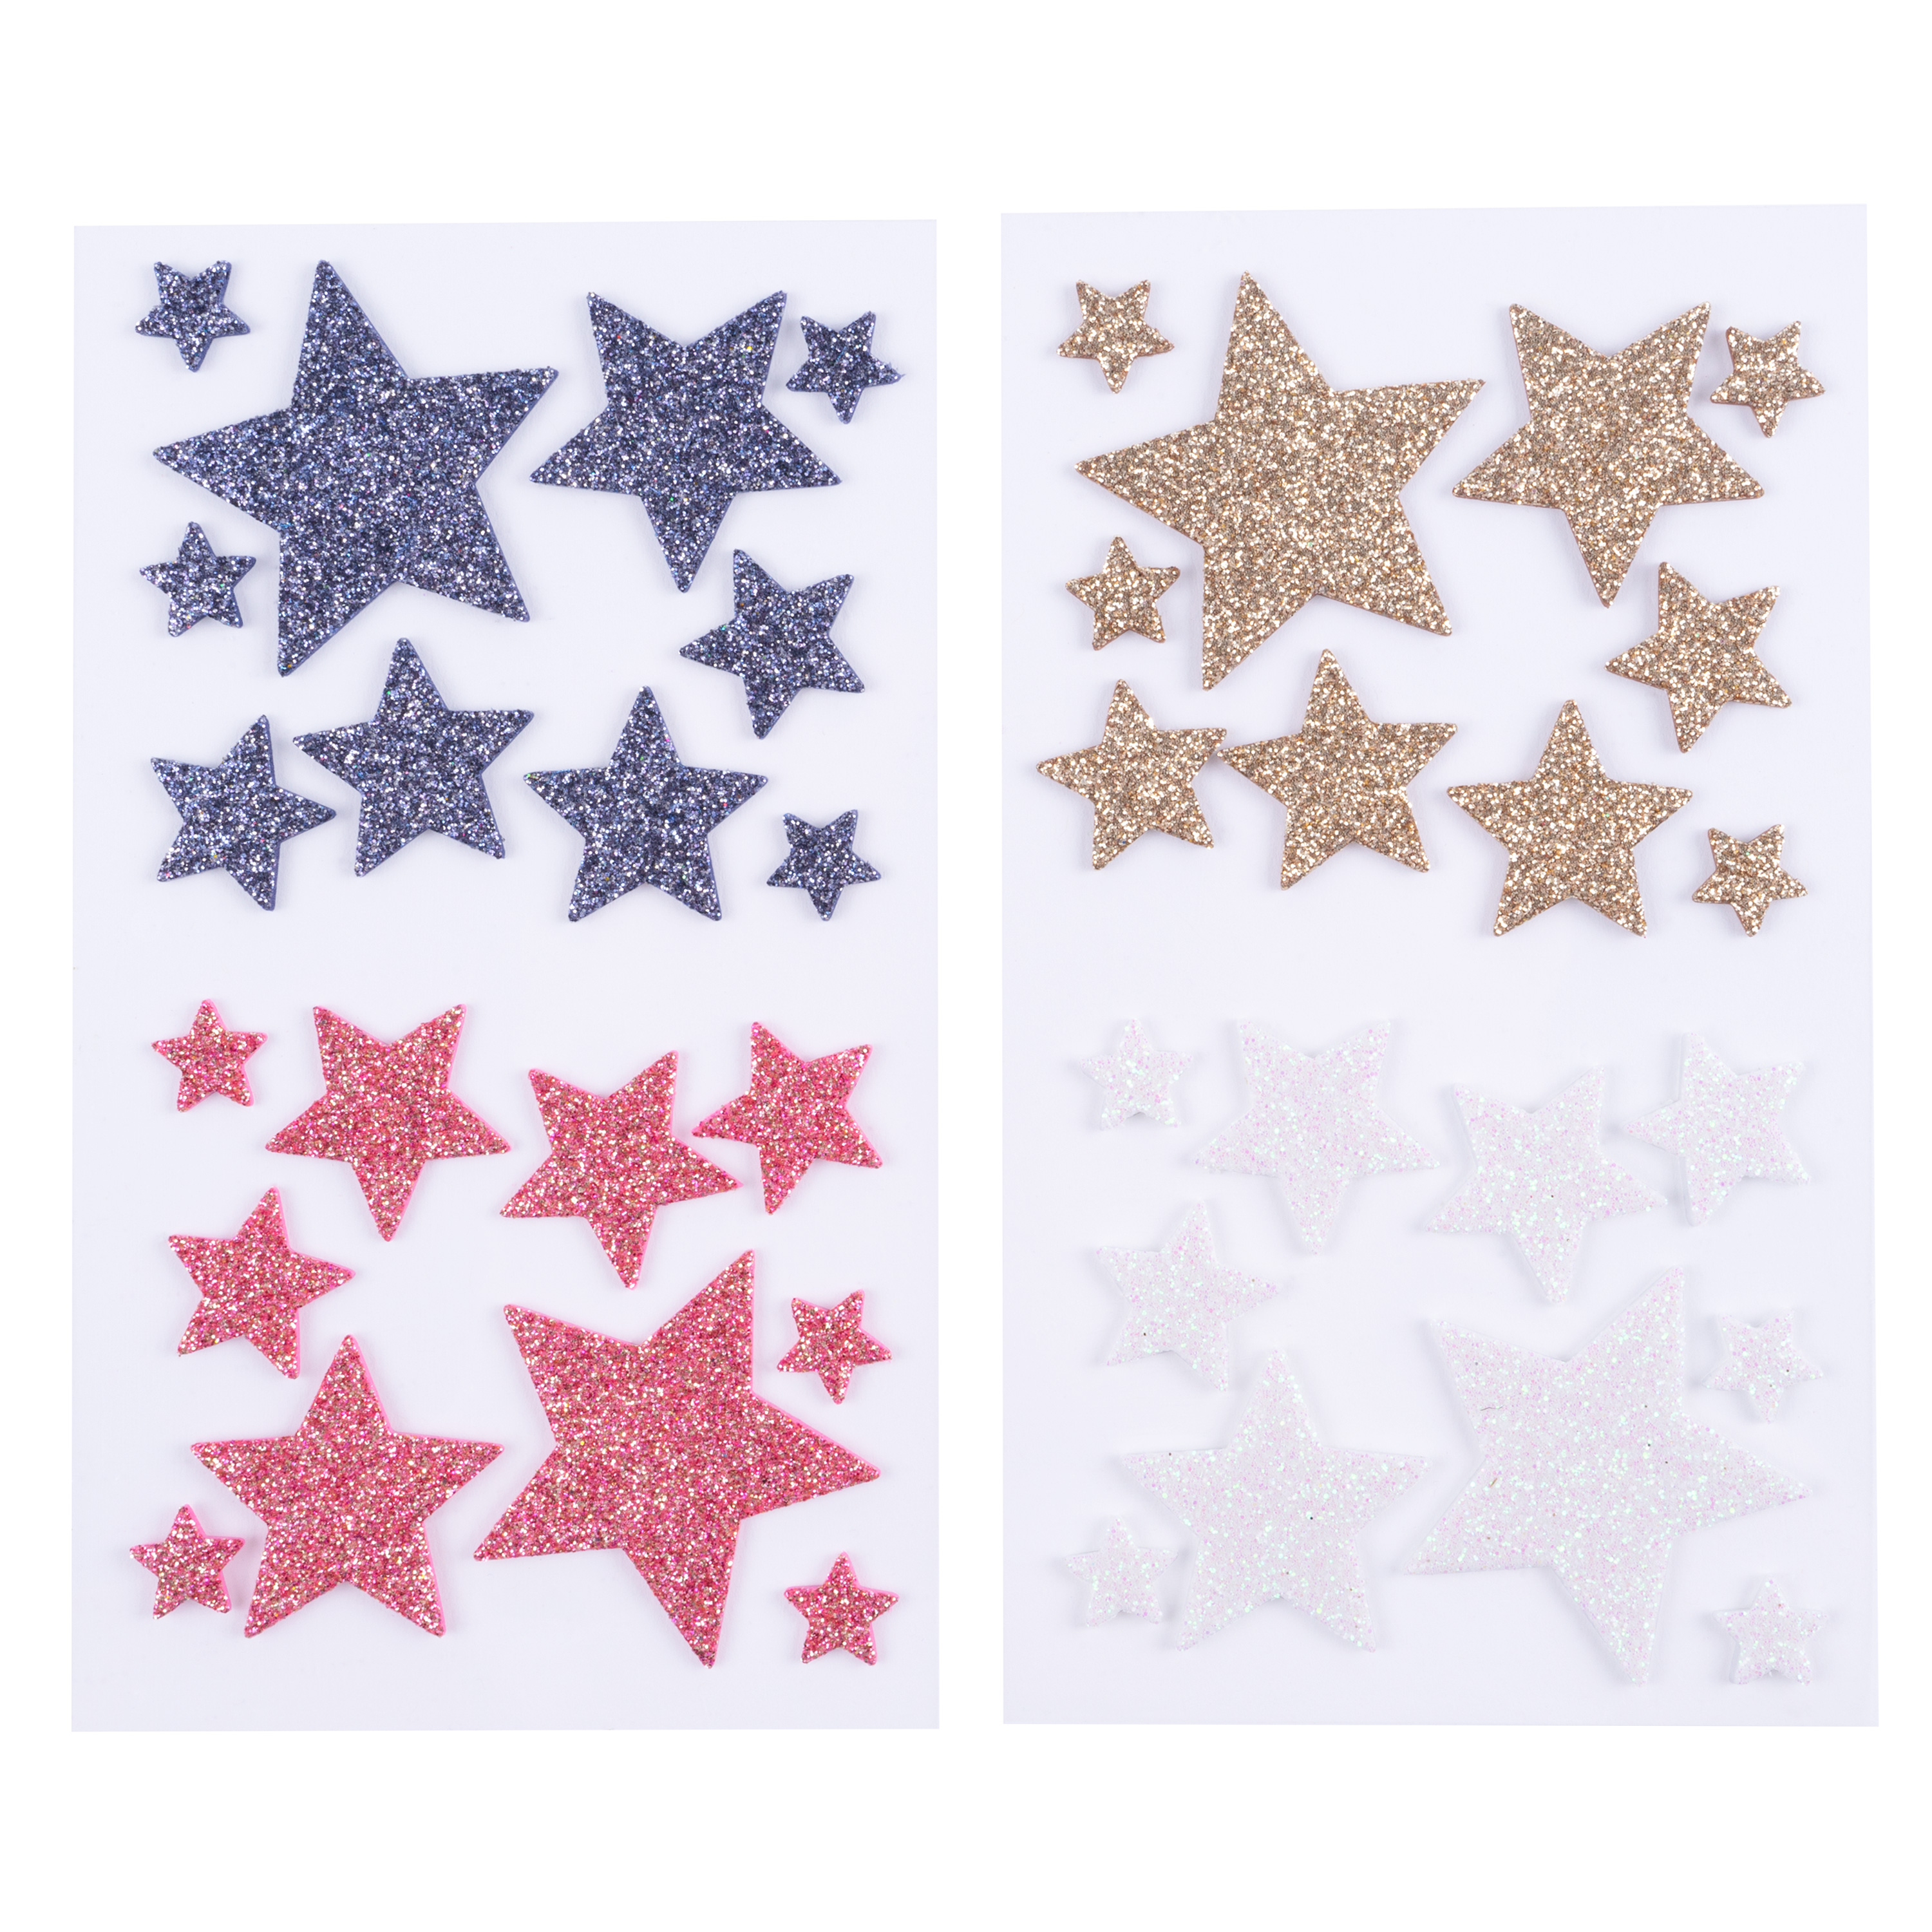 Moosgummi Glitter-Sticker „Sterne“, 40 Sticker